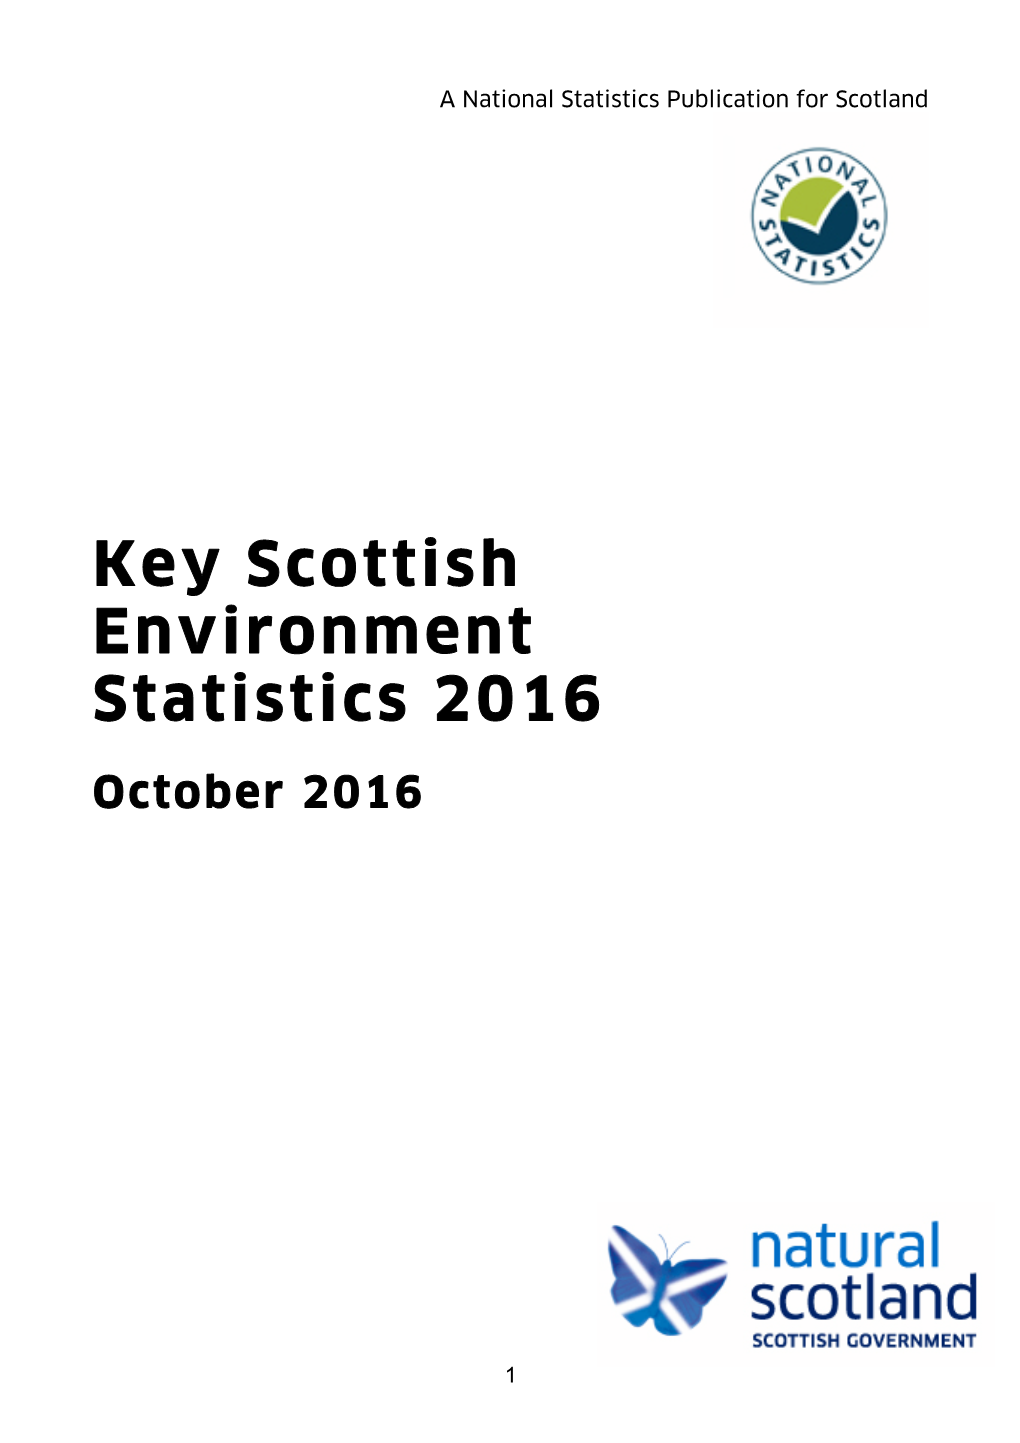 Key Scottish Environment: Statistics 2016